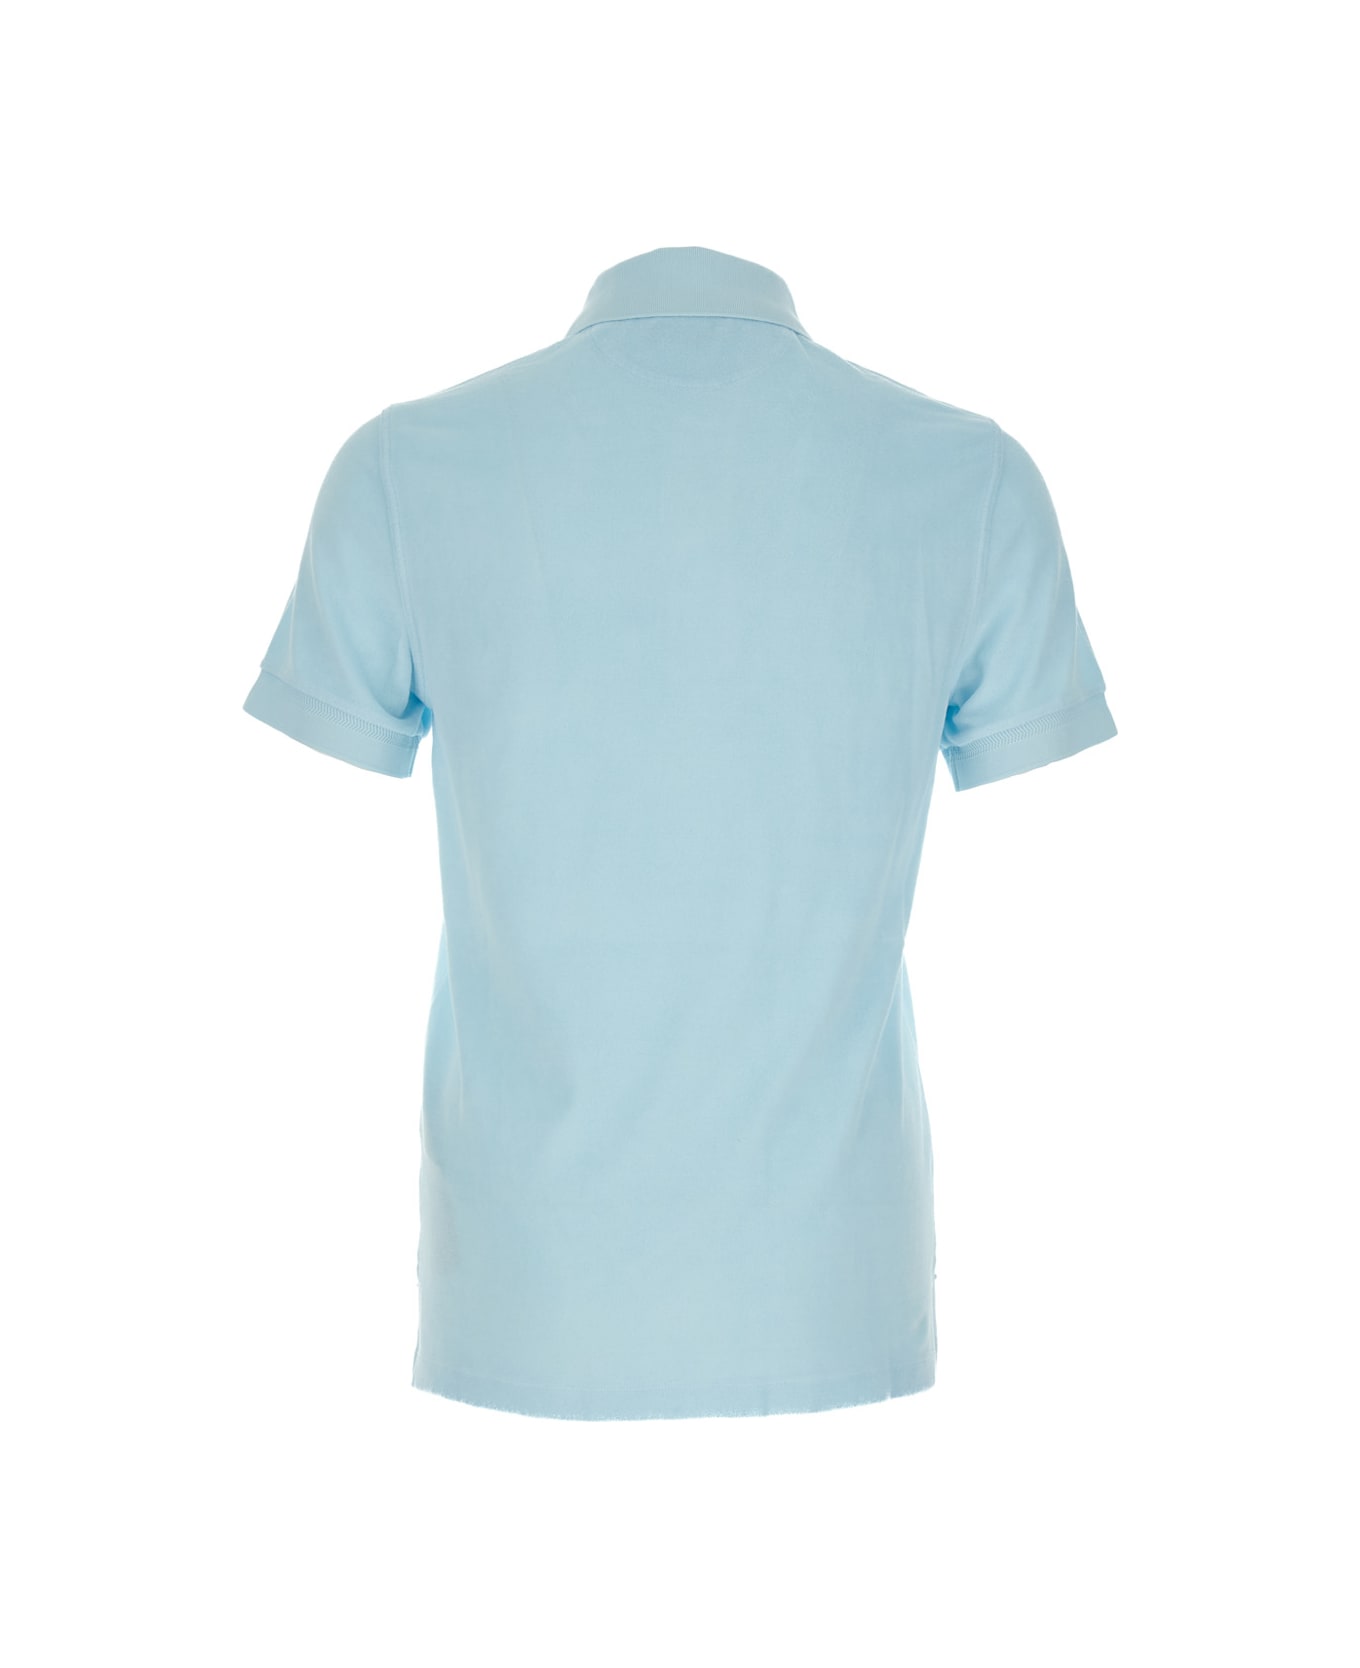 Tom Ford Light-blue Polo T-shirt In Cotton Blend Man - Light blue